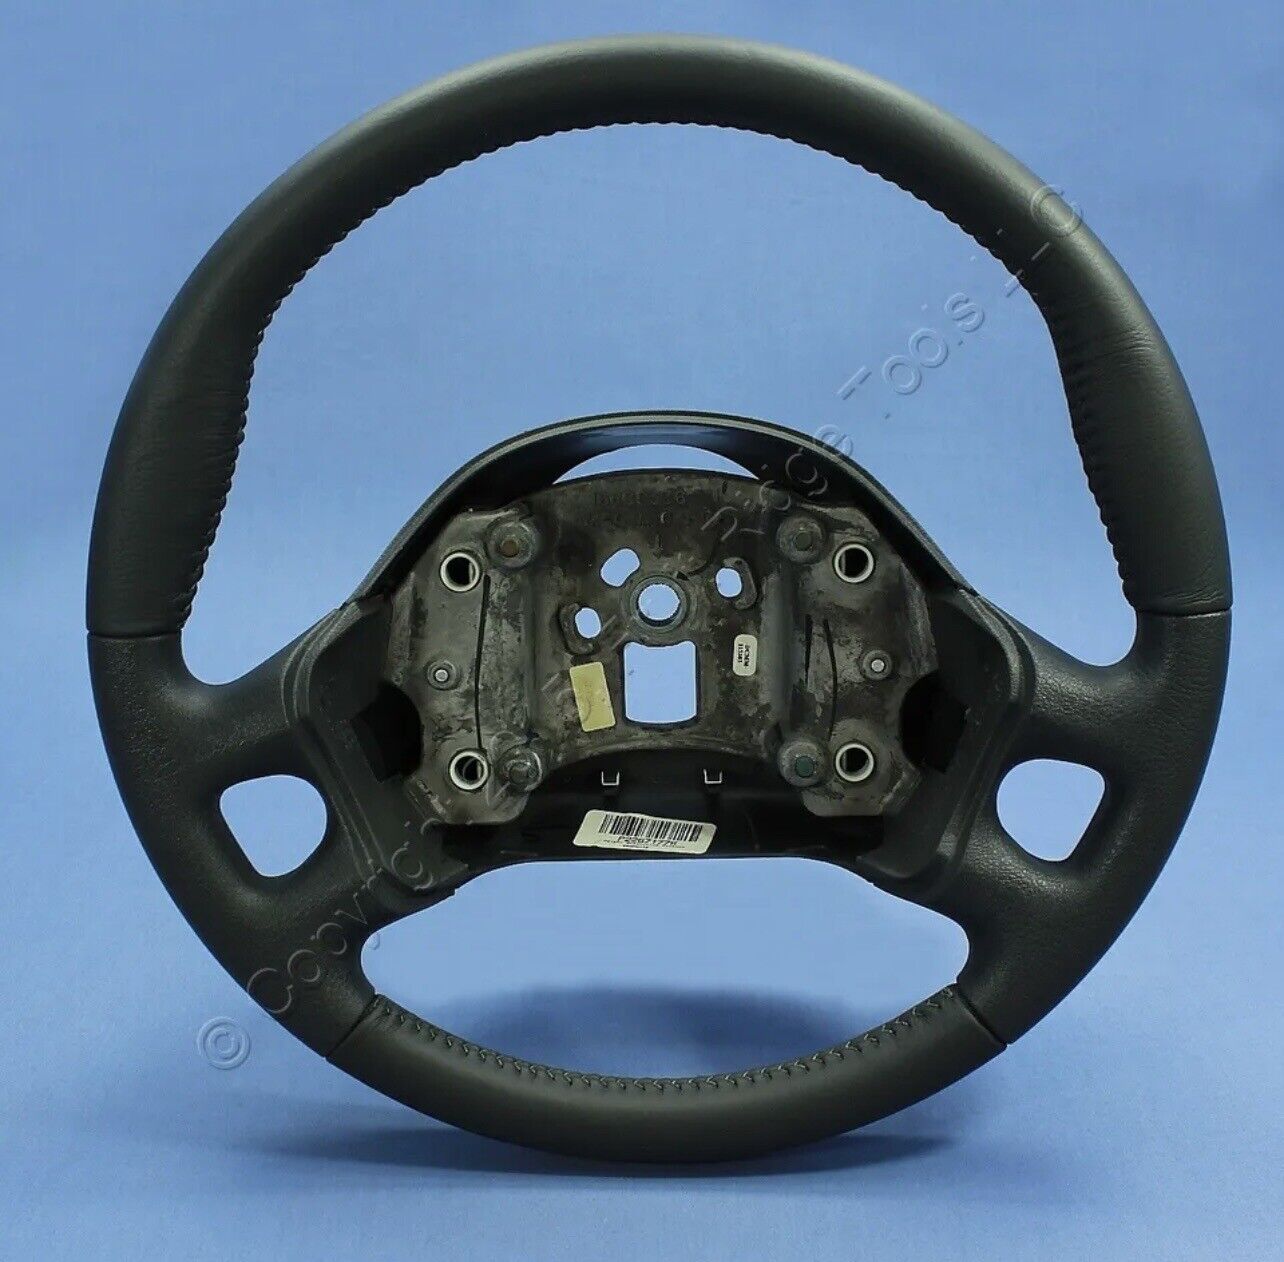 GM OEM Graphite Leather Steering Wheel 22671778 03-05 Sunfire Cavalier